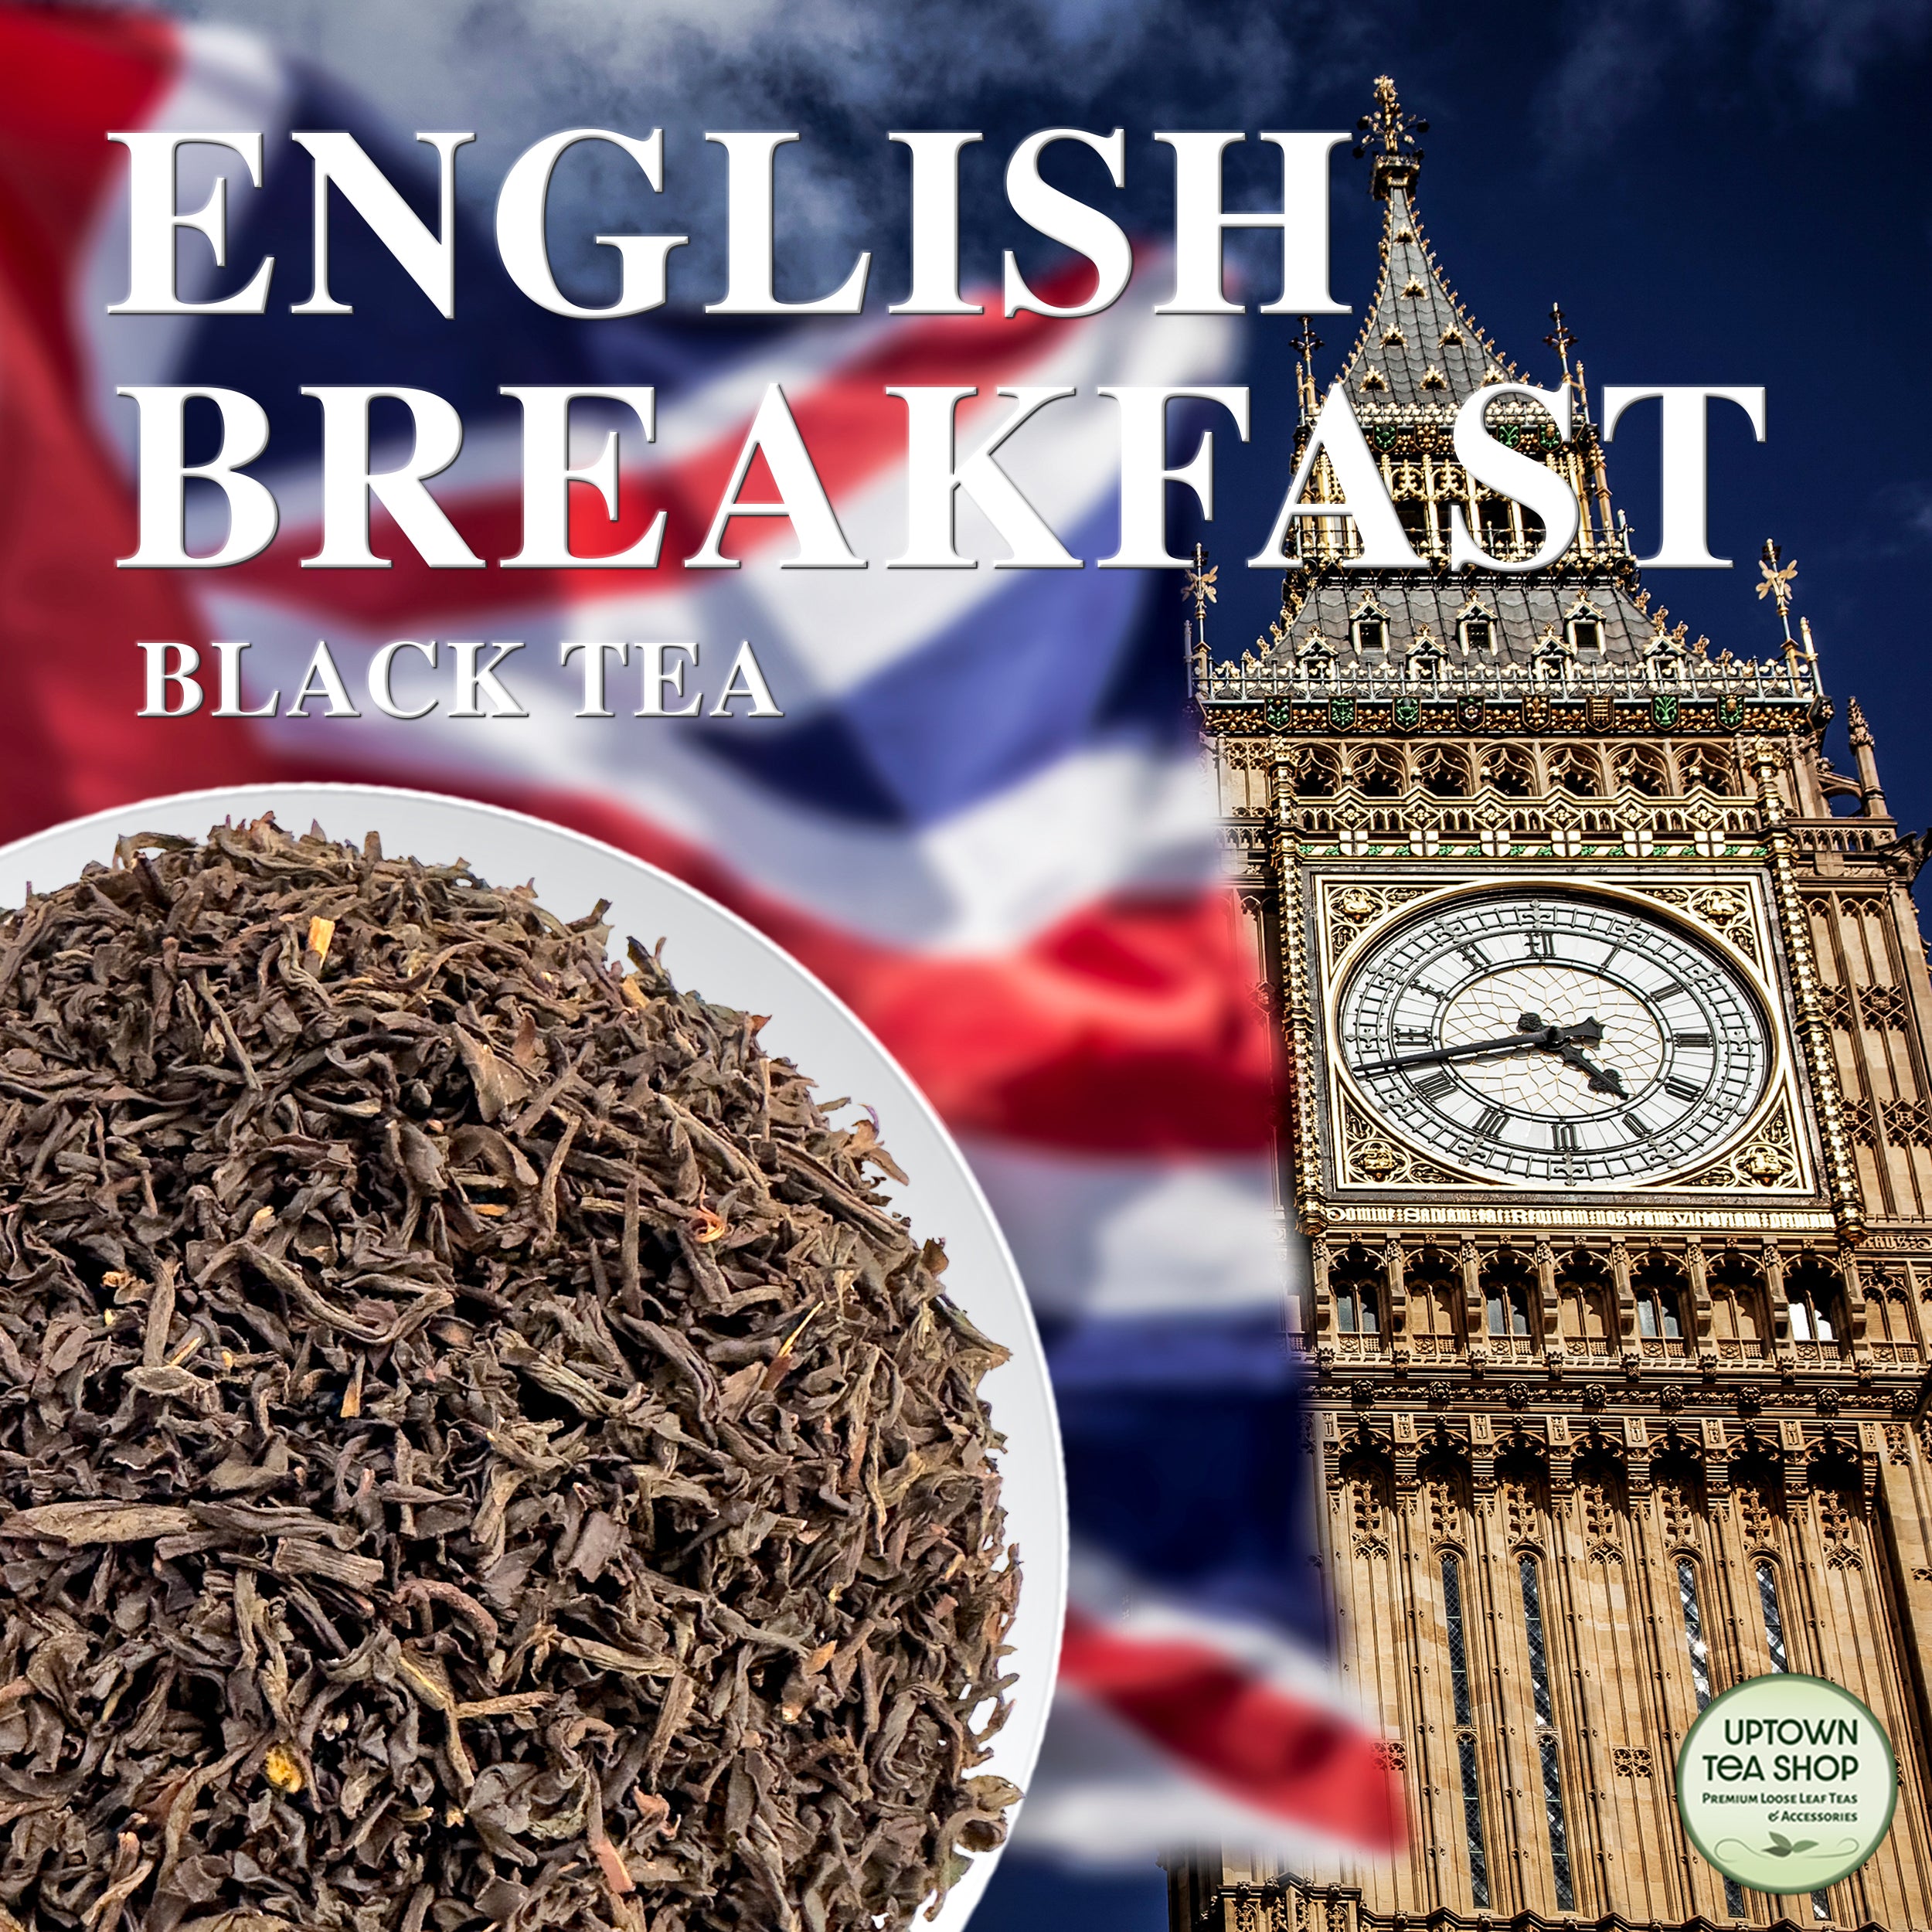 English Breakfast Black Tea